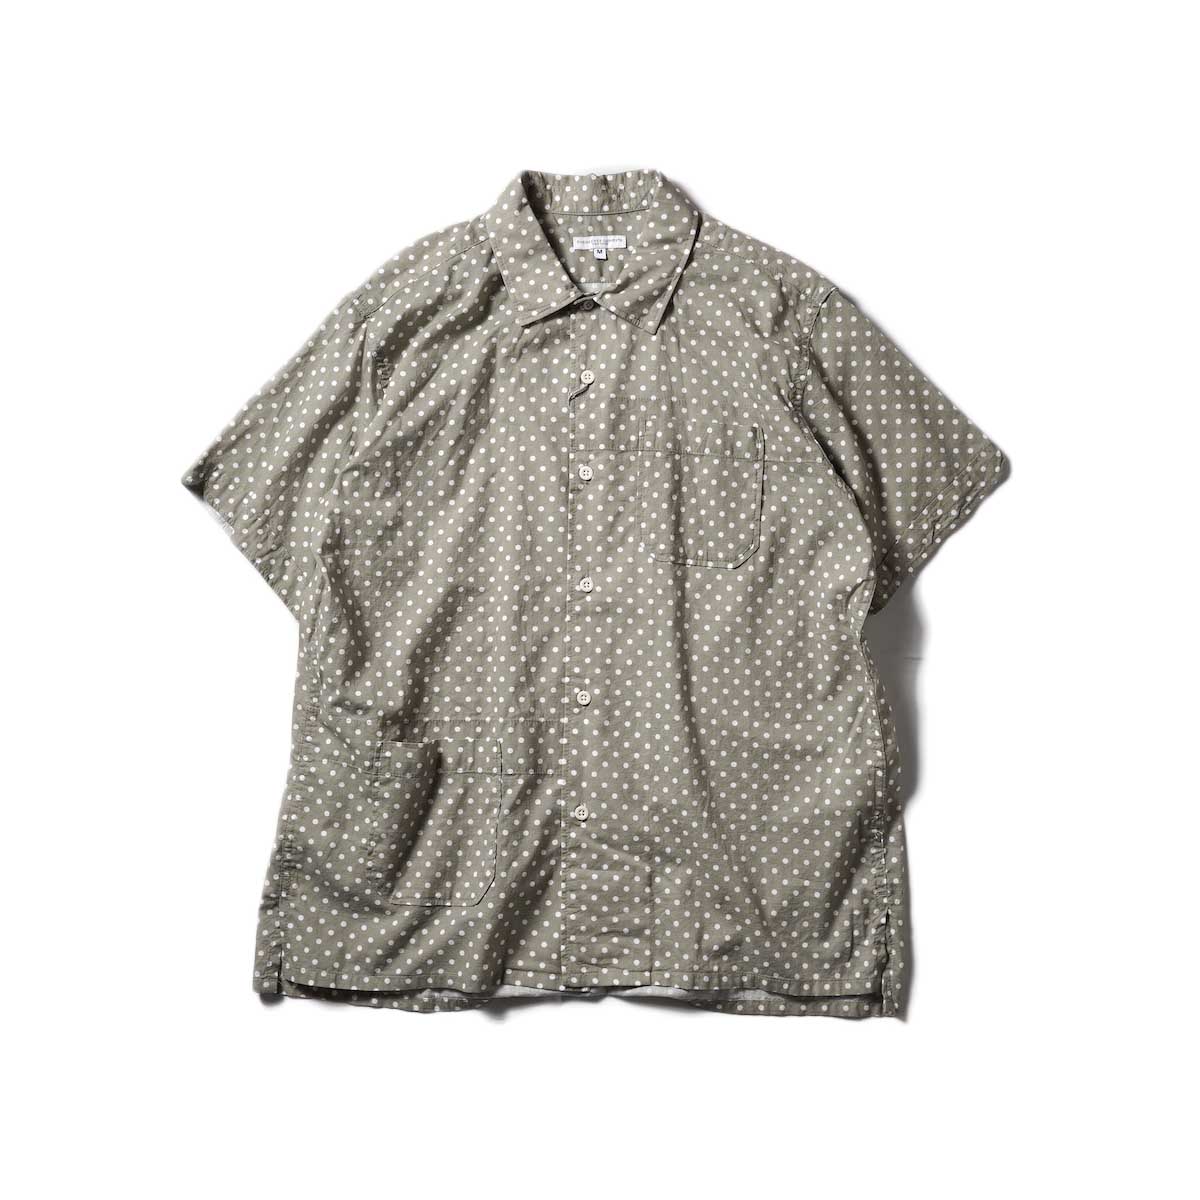 Engineered Garments / Camp Shirt - Polka Dot Cotton Lawn (Tan)